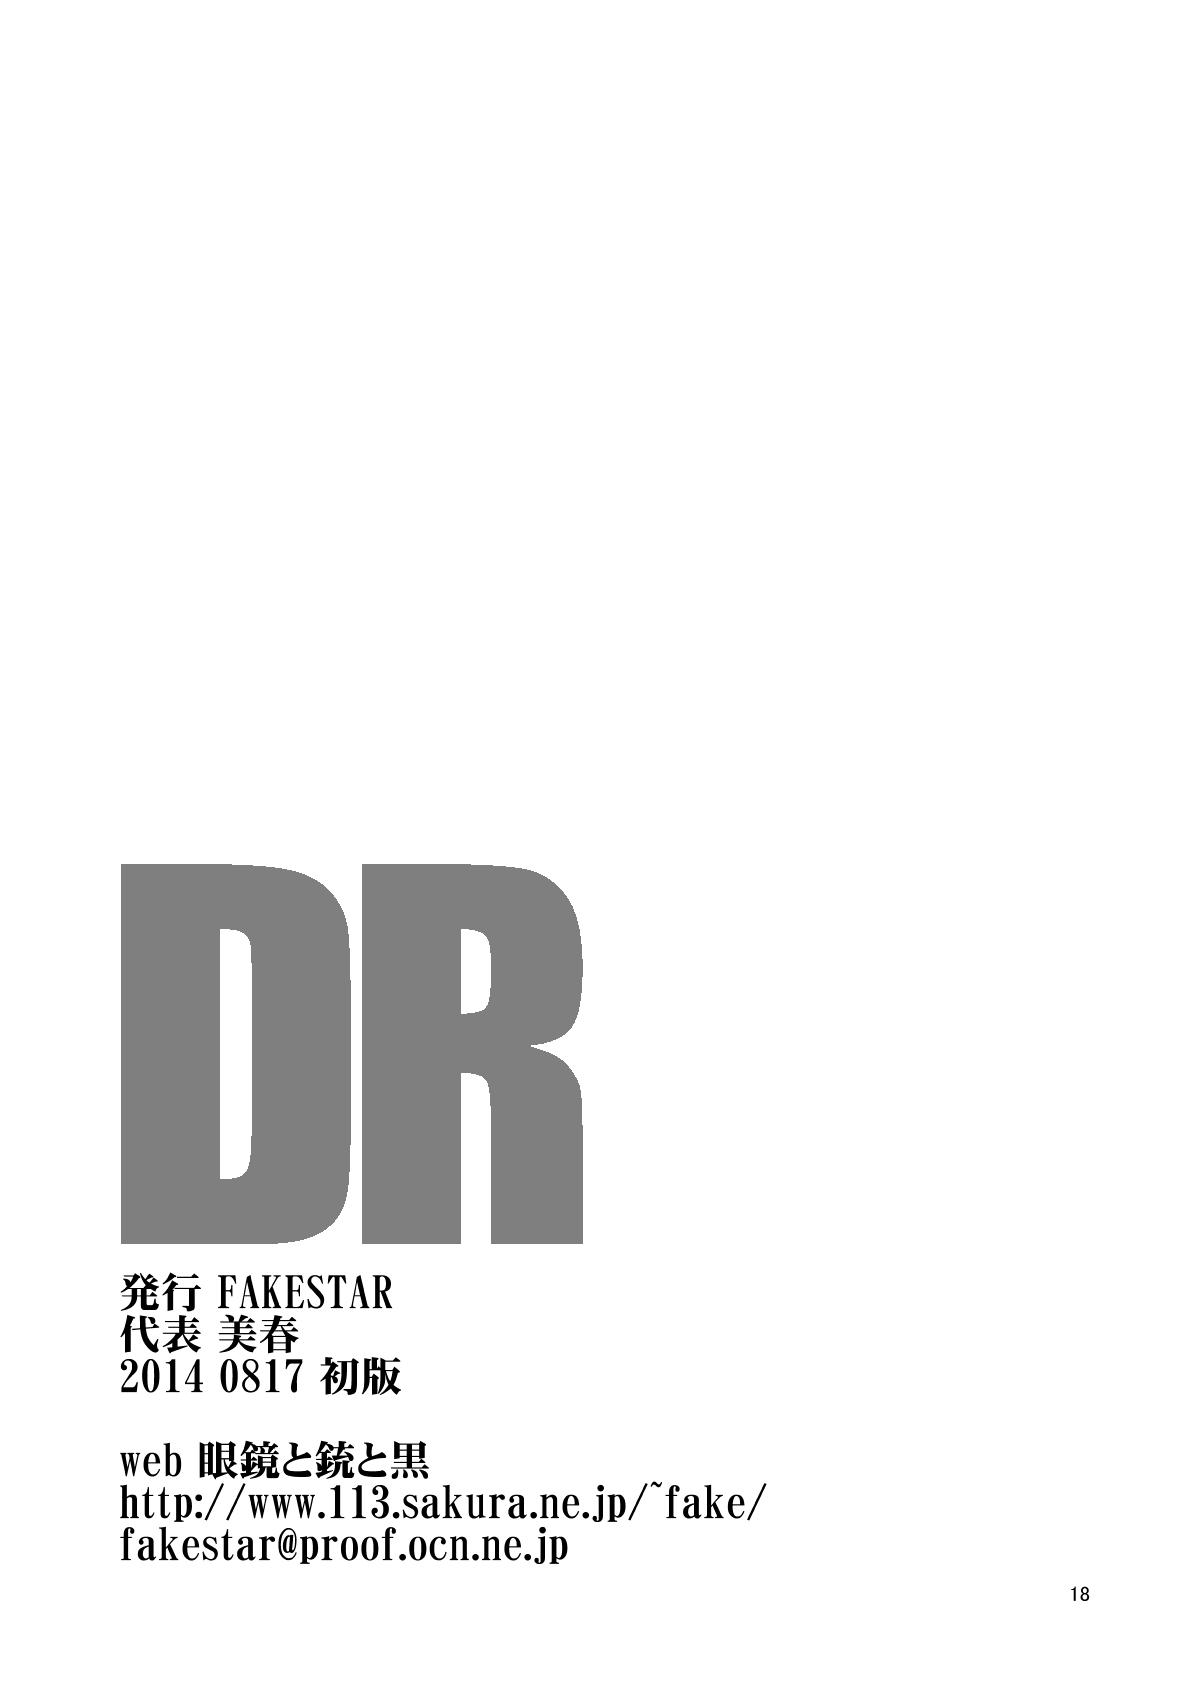 DR 17